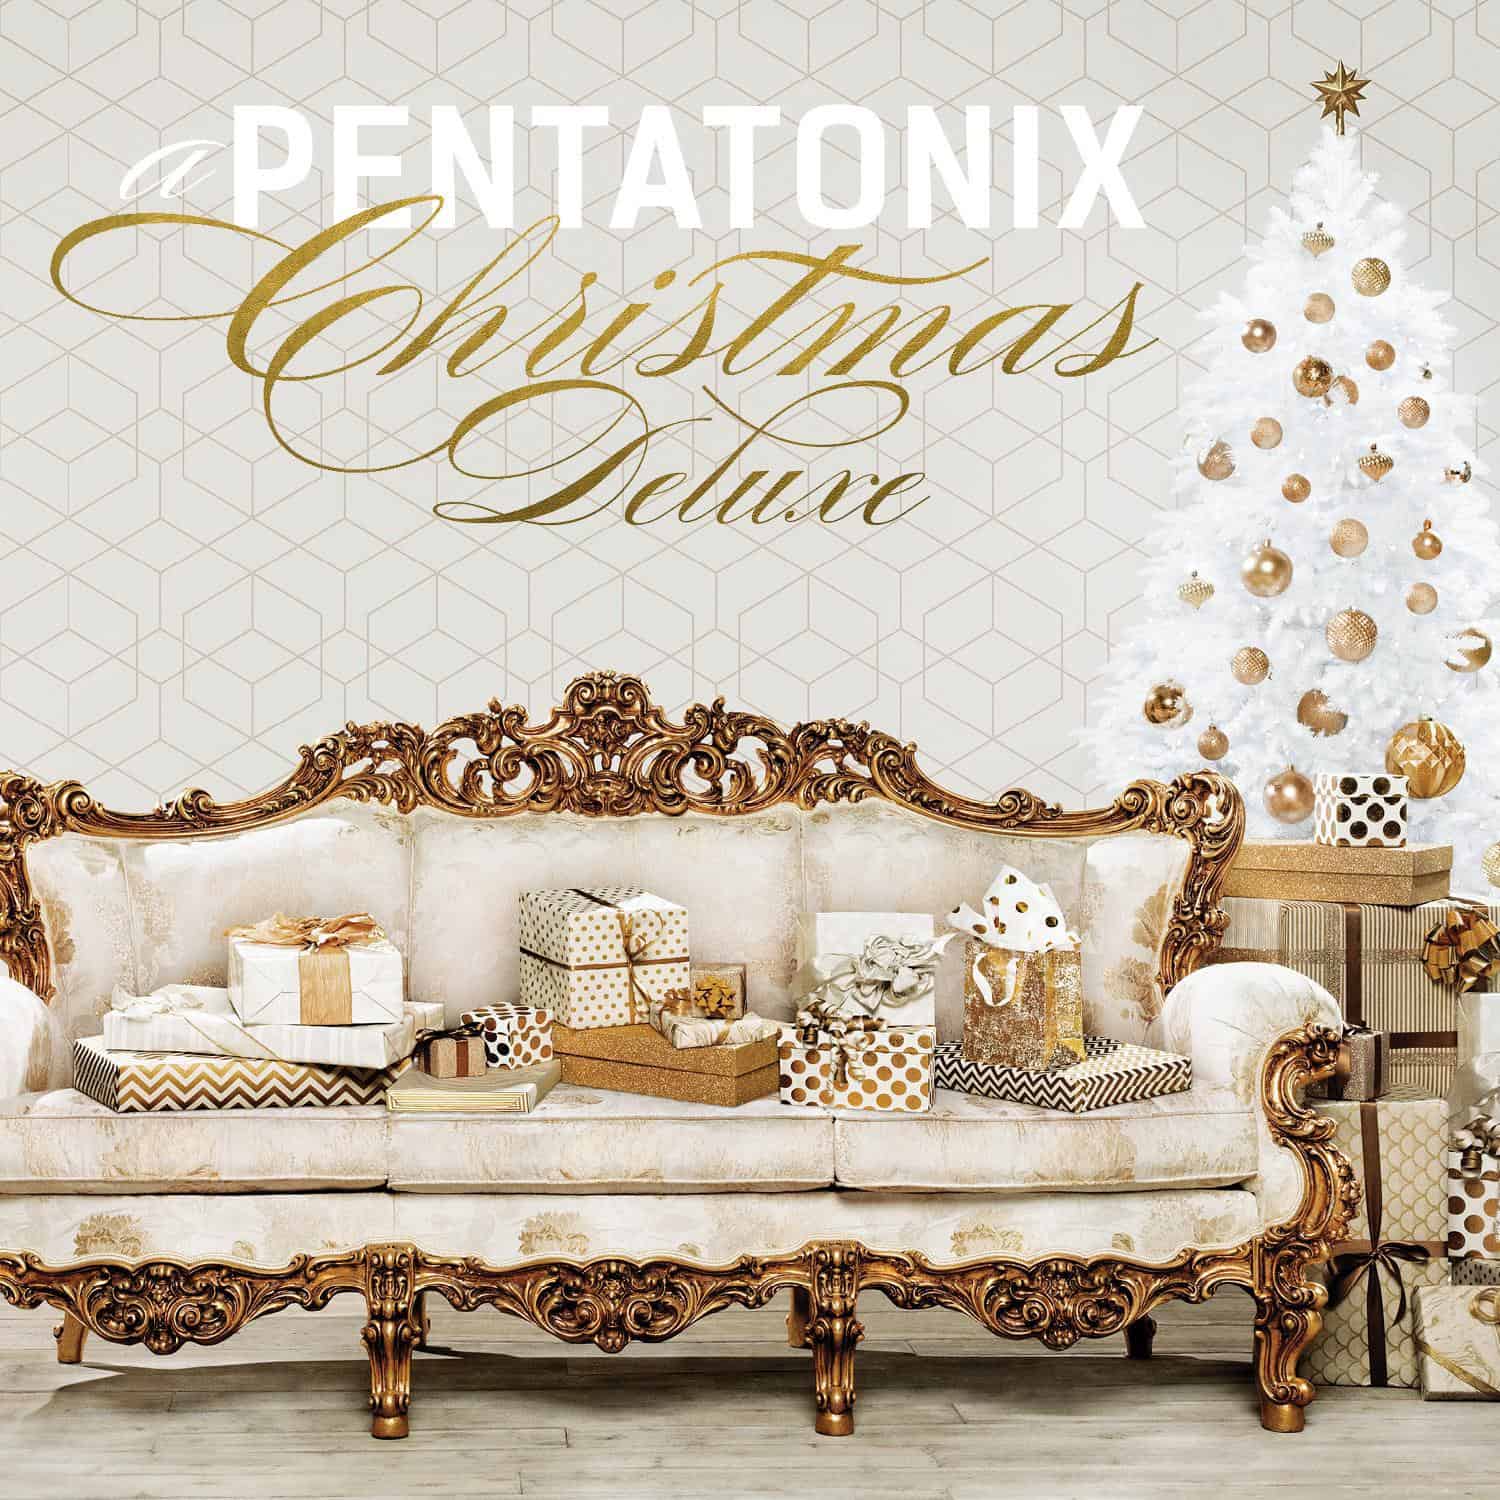 Kultura, MUZYKA Pentatonix "A Pentatonix Christmas Deluxe" wZielonej.pl